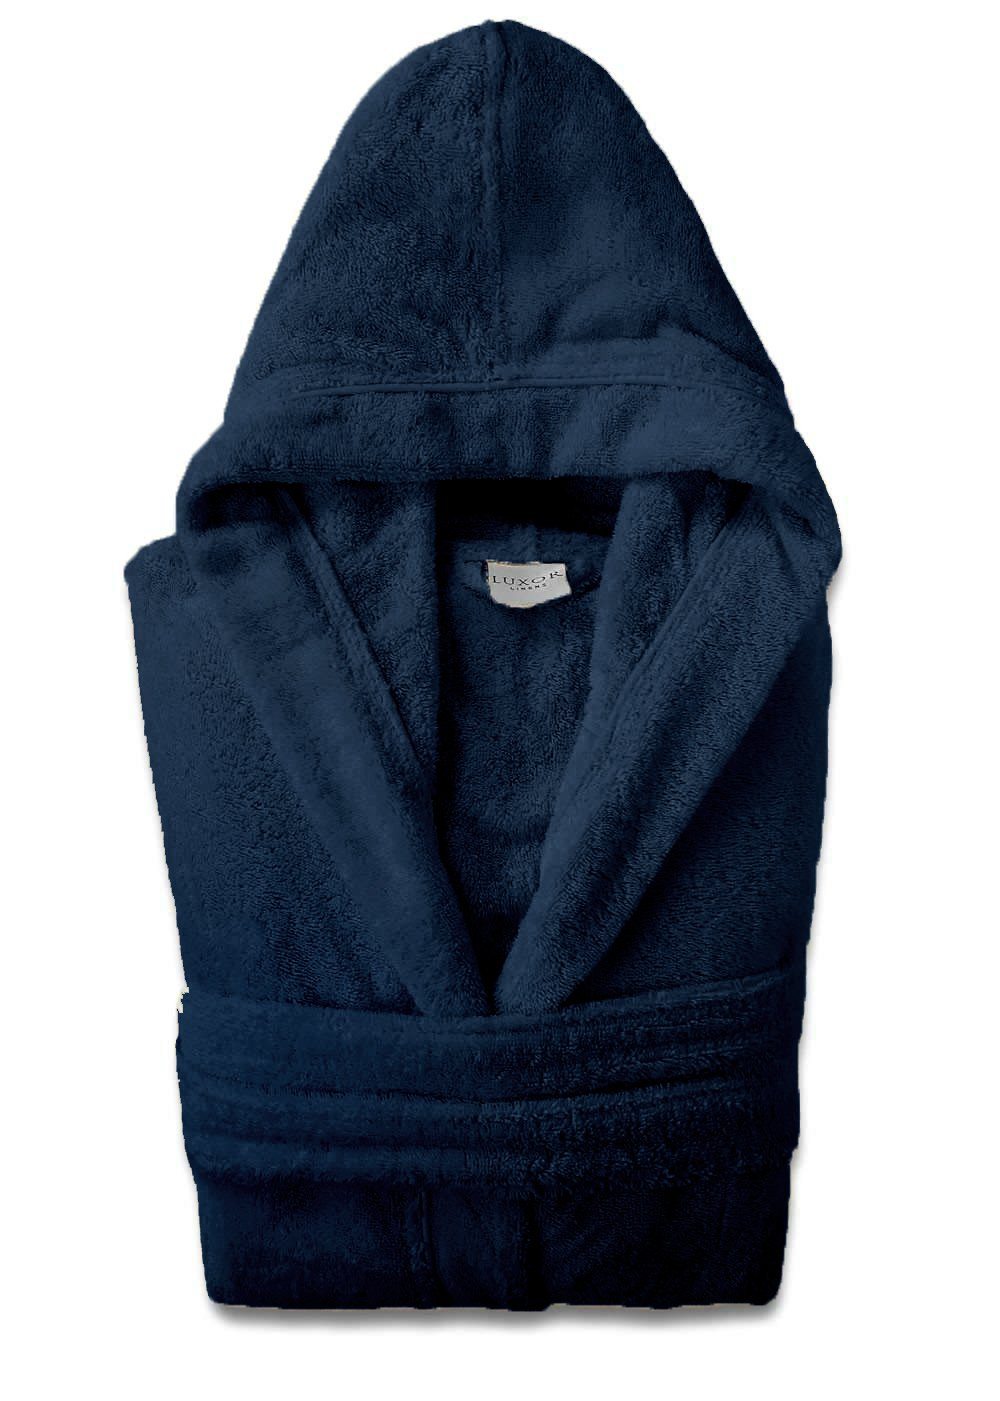 hooded grey soft plush warm comfortable mens spa robe bathrobe – Royalty  Robes